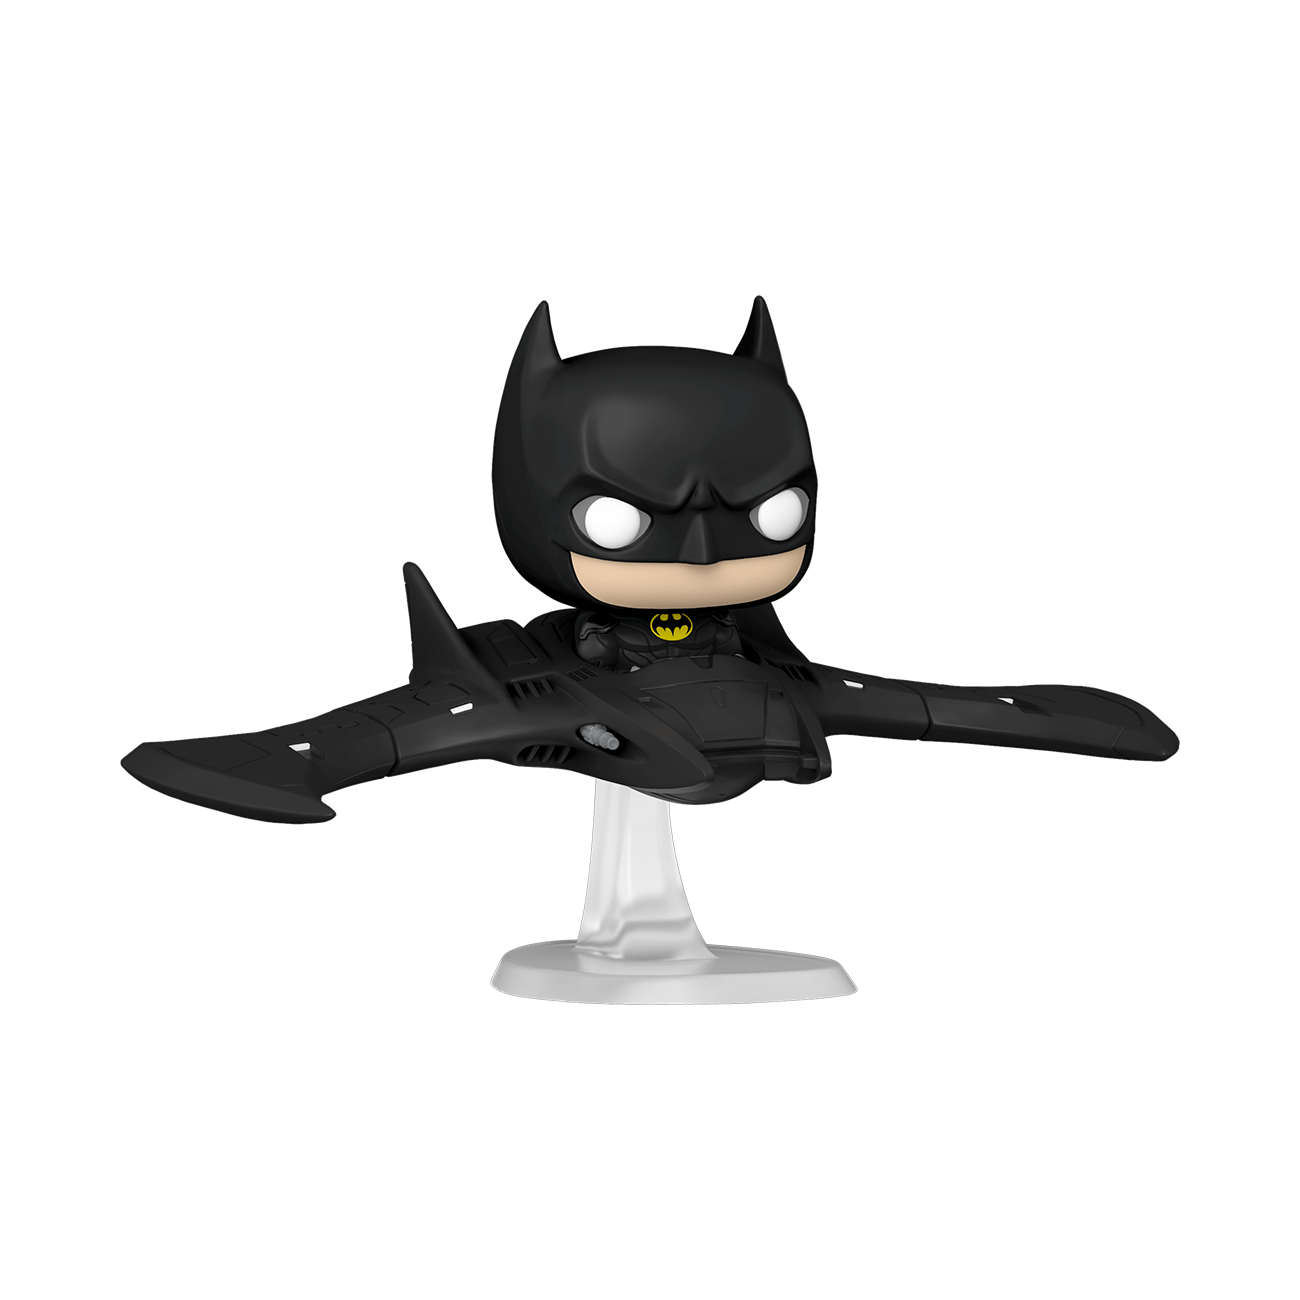 batman batwing